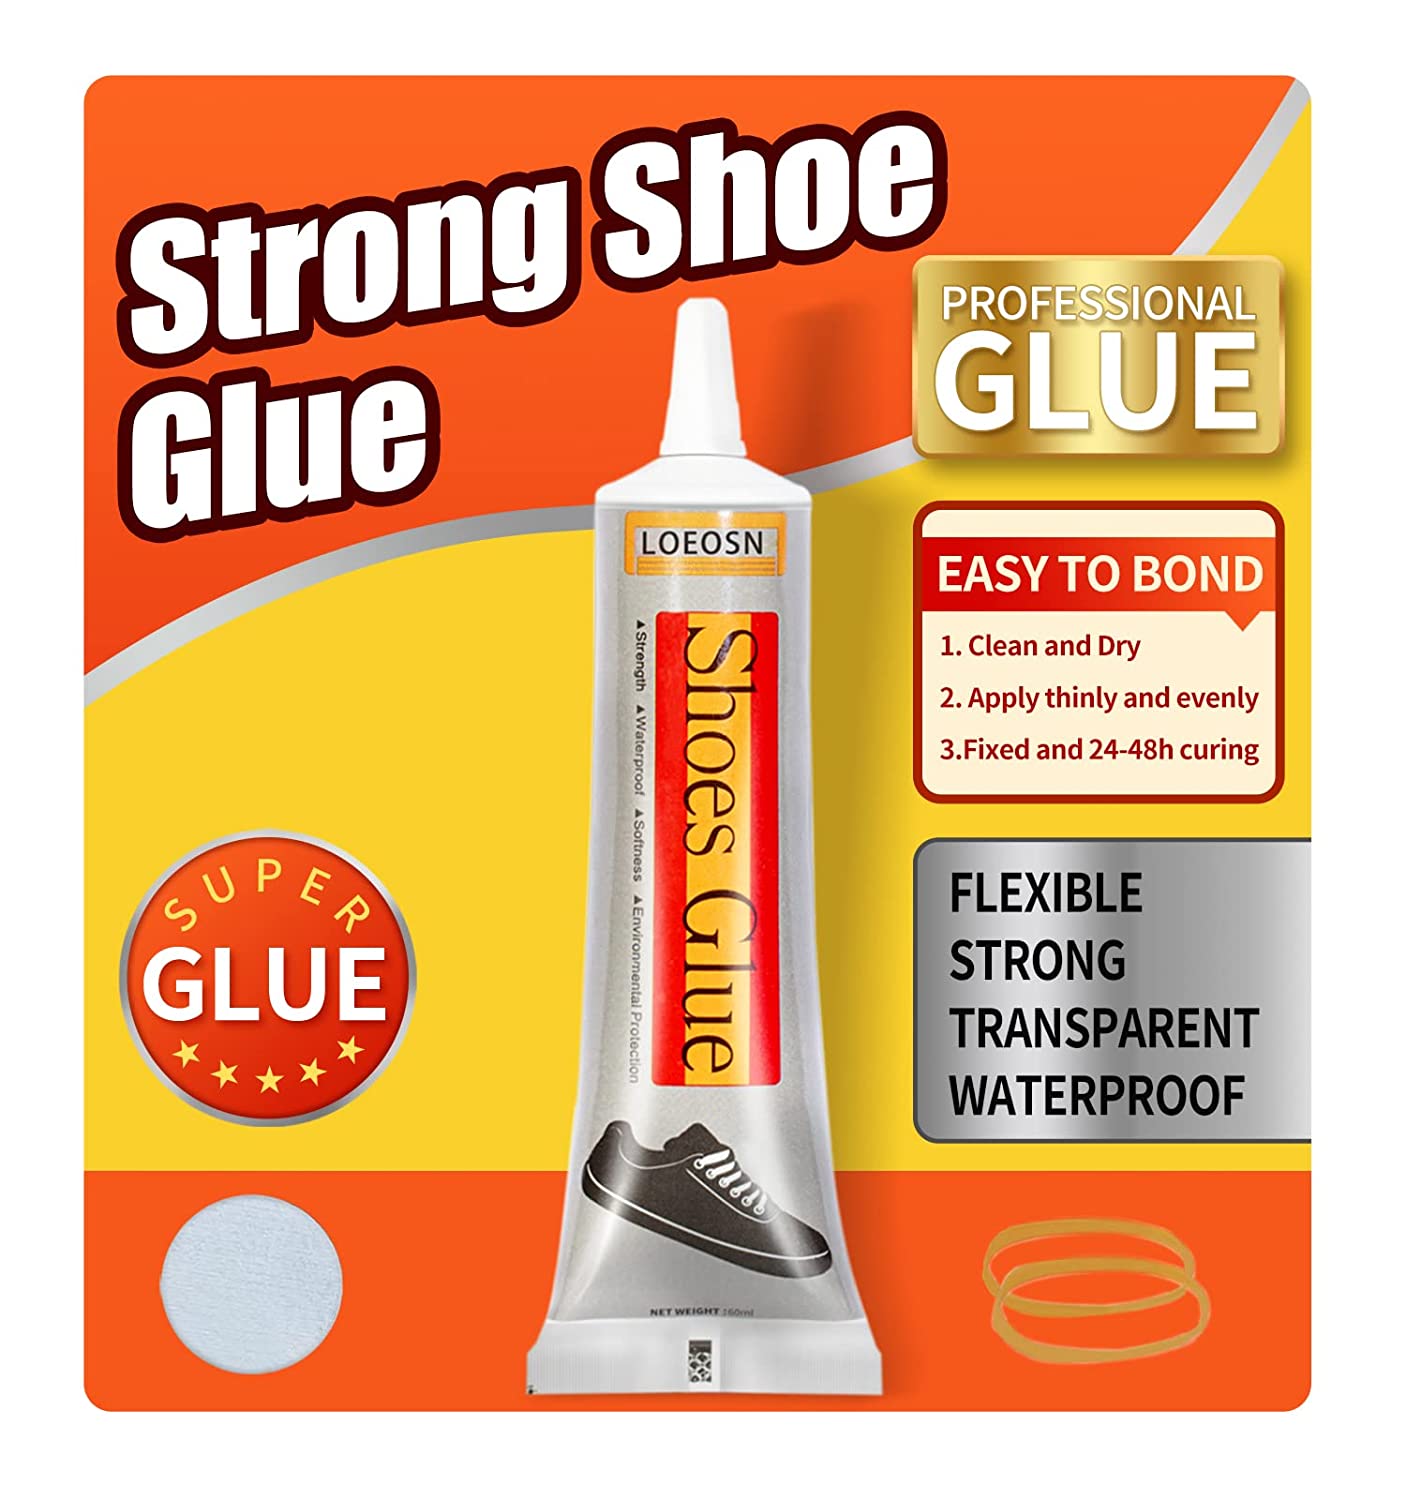 EFFIBOND shoe glue heavy duty glues adhesive super glue heavy duty japan  glue for shoes super glue original for shoes shoes glue non-toxic  non-sticky hand waterproof transparent repair 60ML